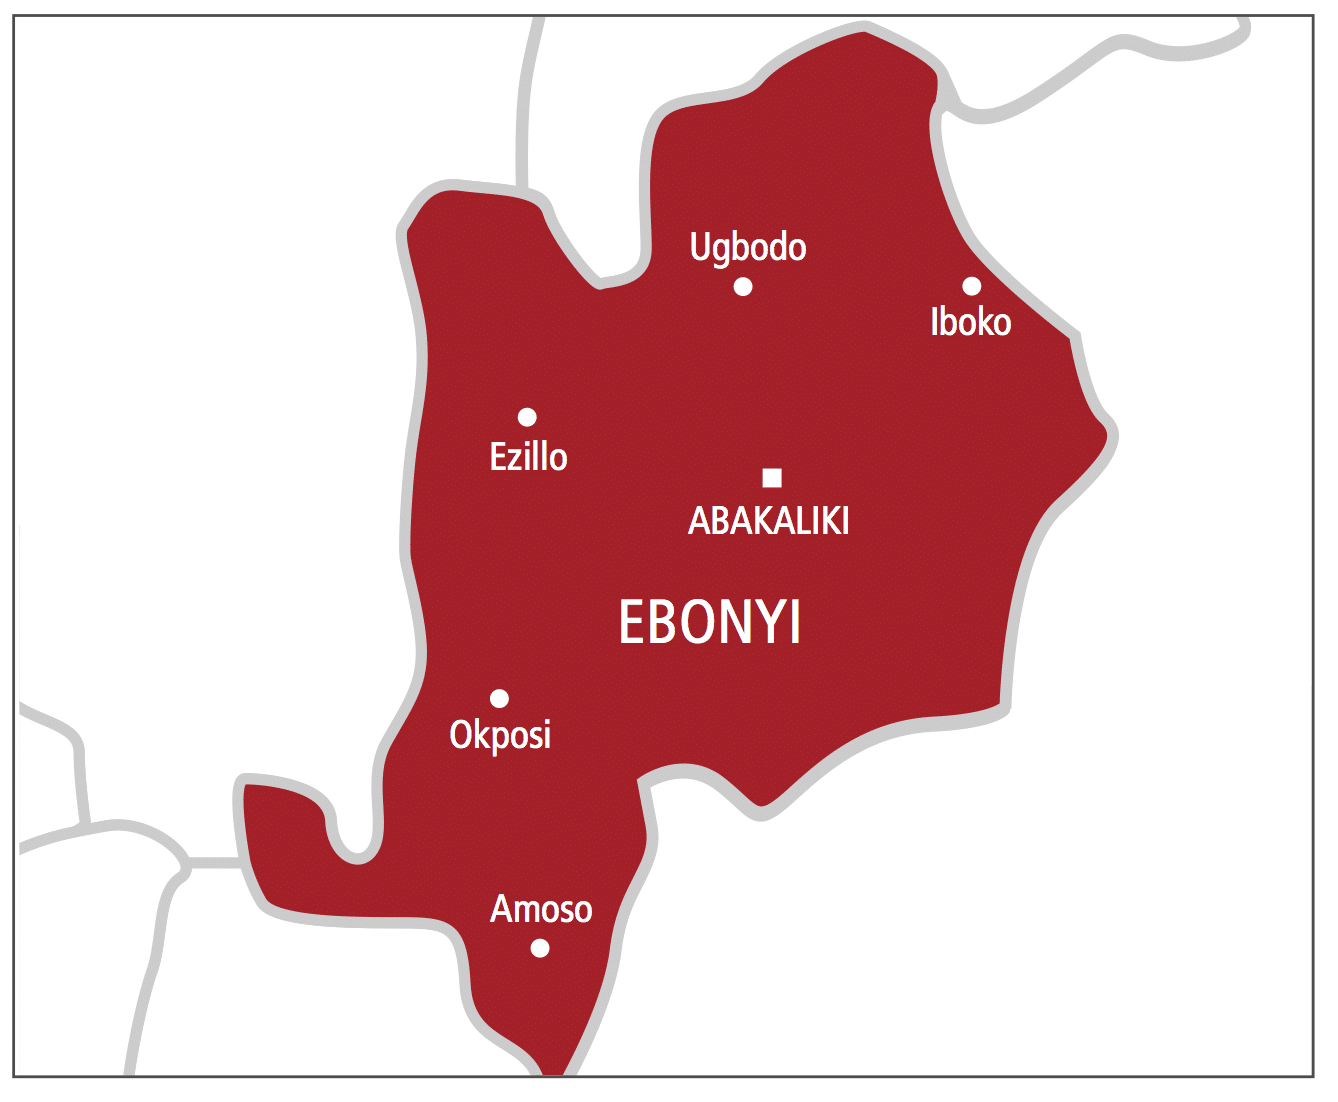 Ebonyi south senatorial bye-election shouldn’t be do or die- LG Chair, Chima